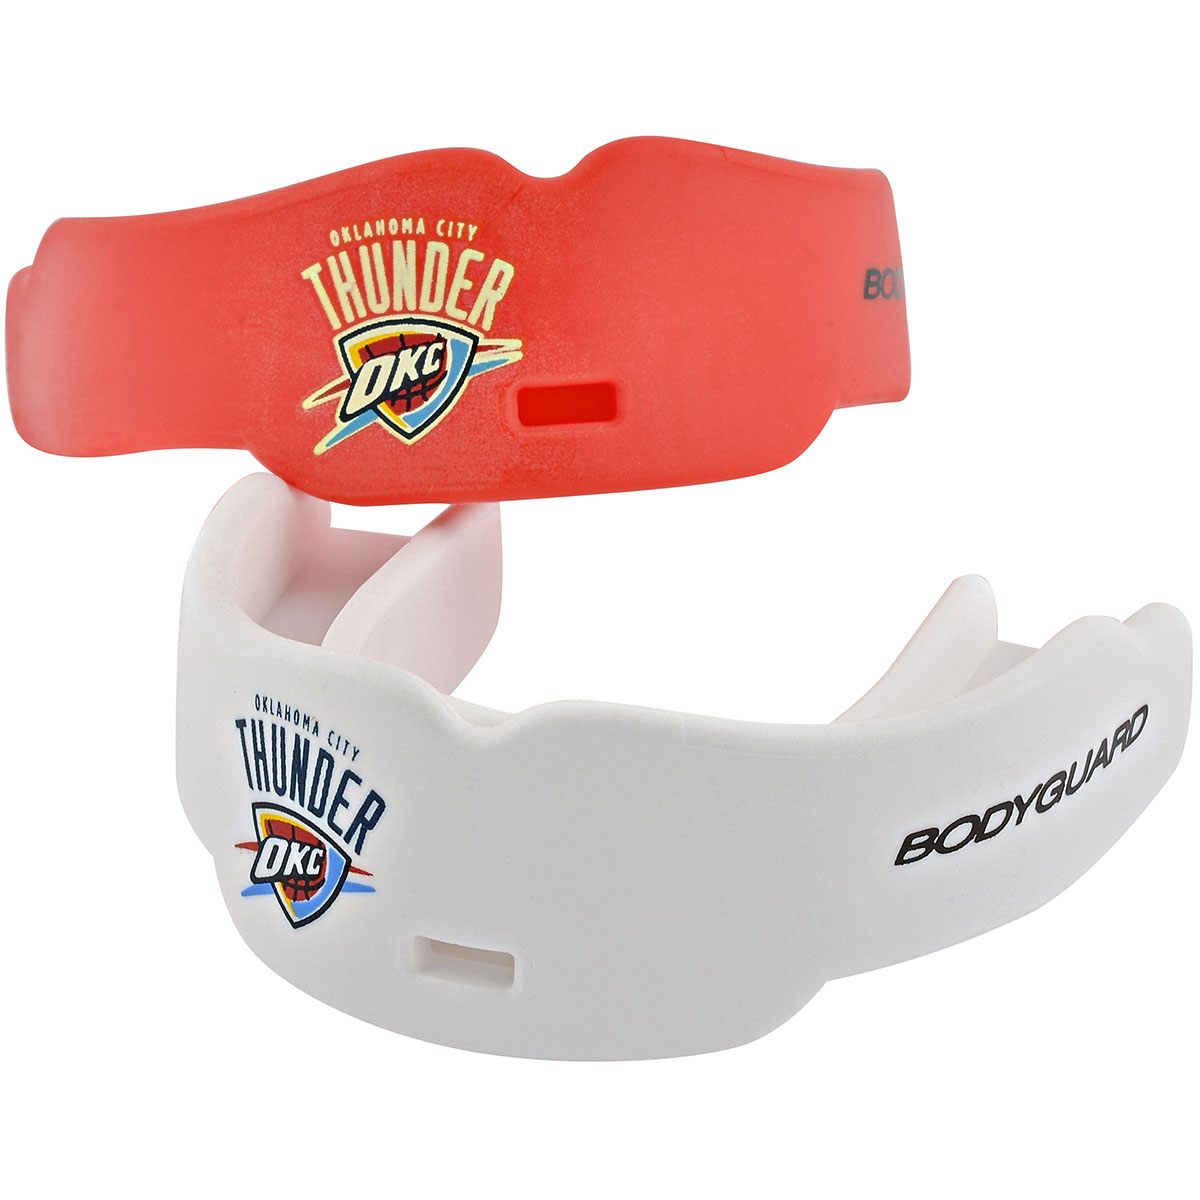 NBA Thunder 2Pk Mouth Guard - Adult - SWG7800S-OKC - image 1 of 2